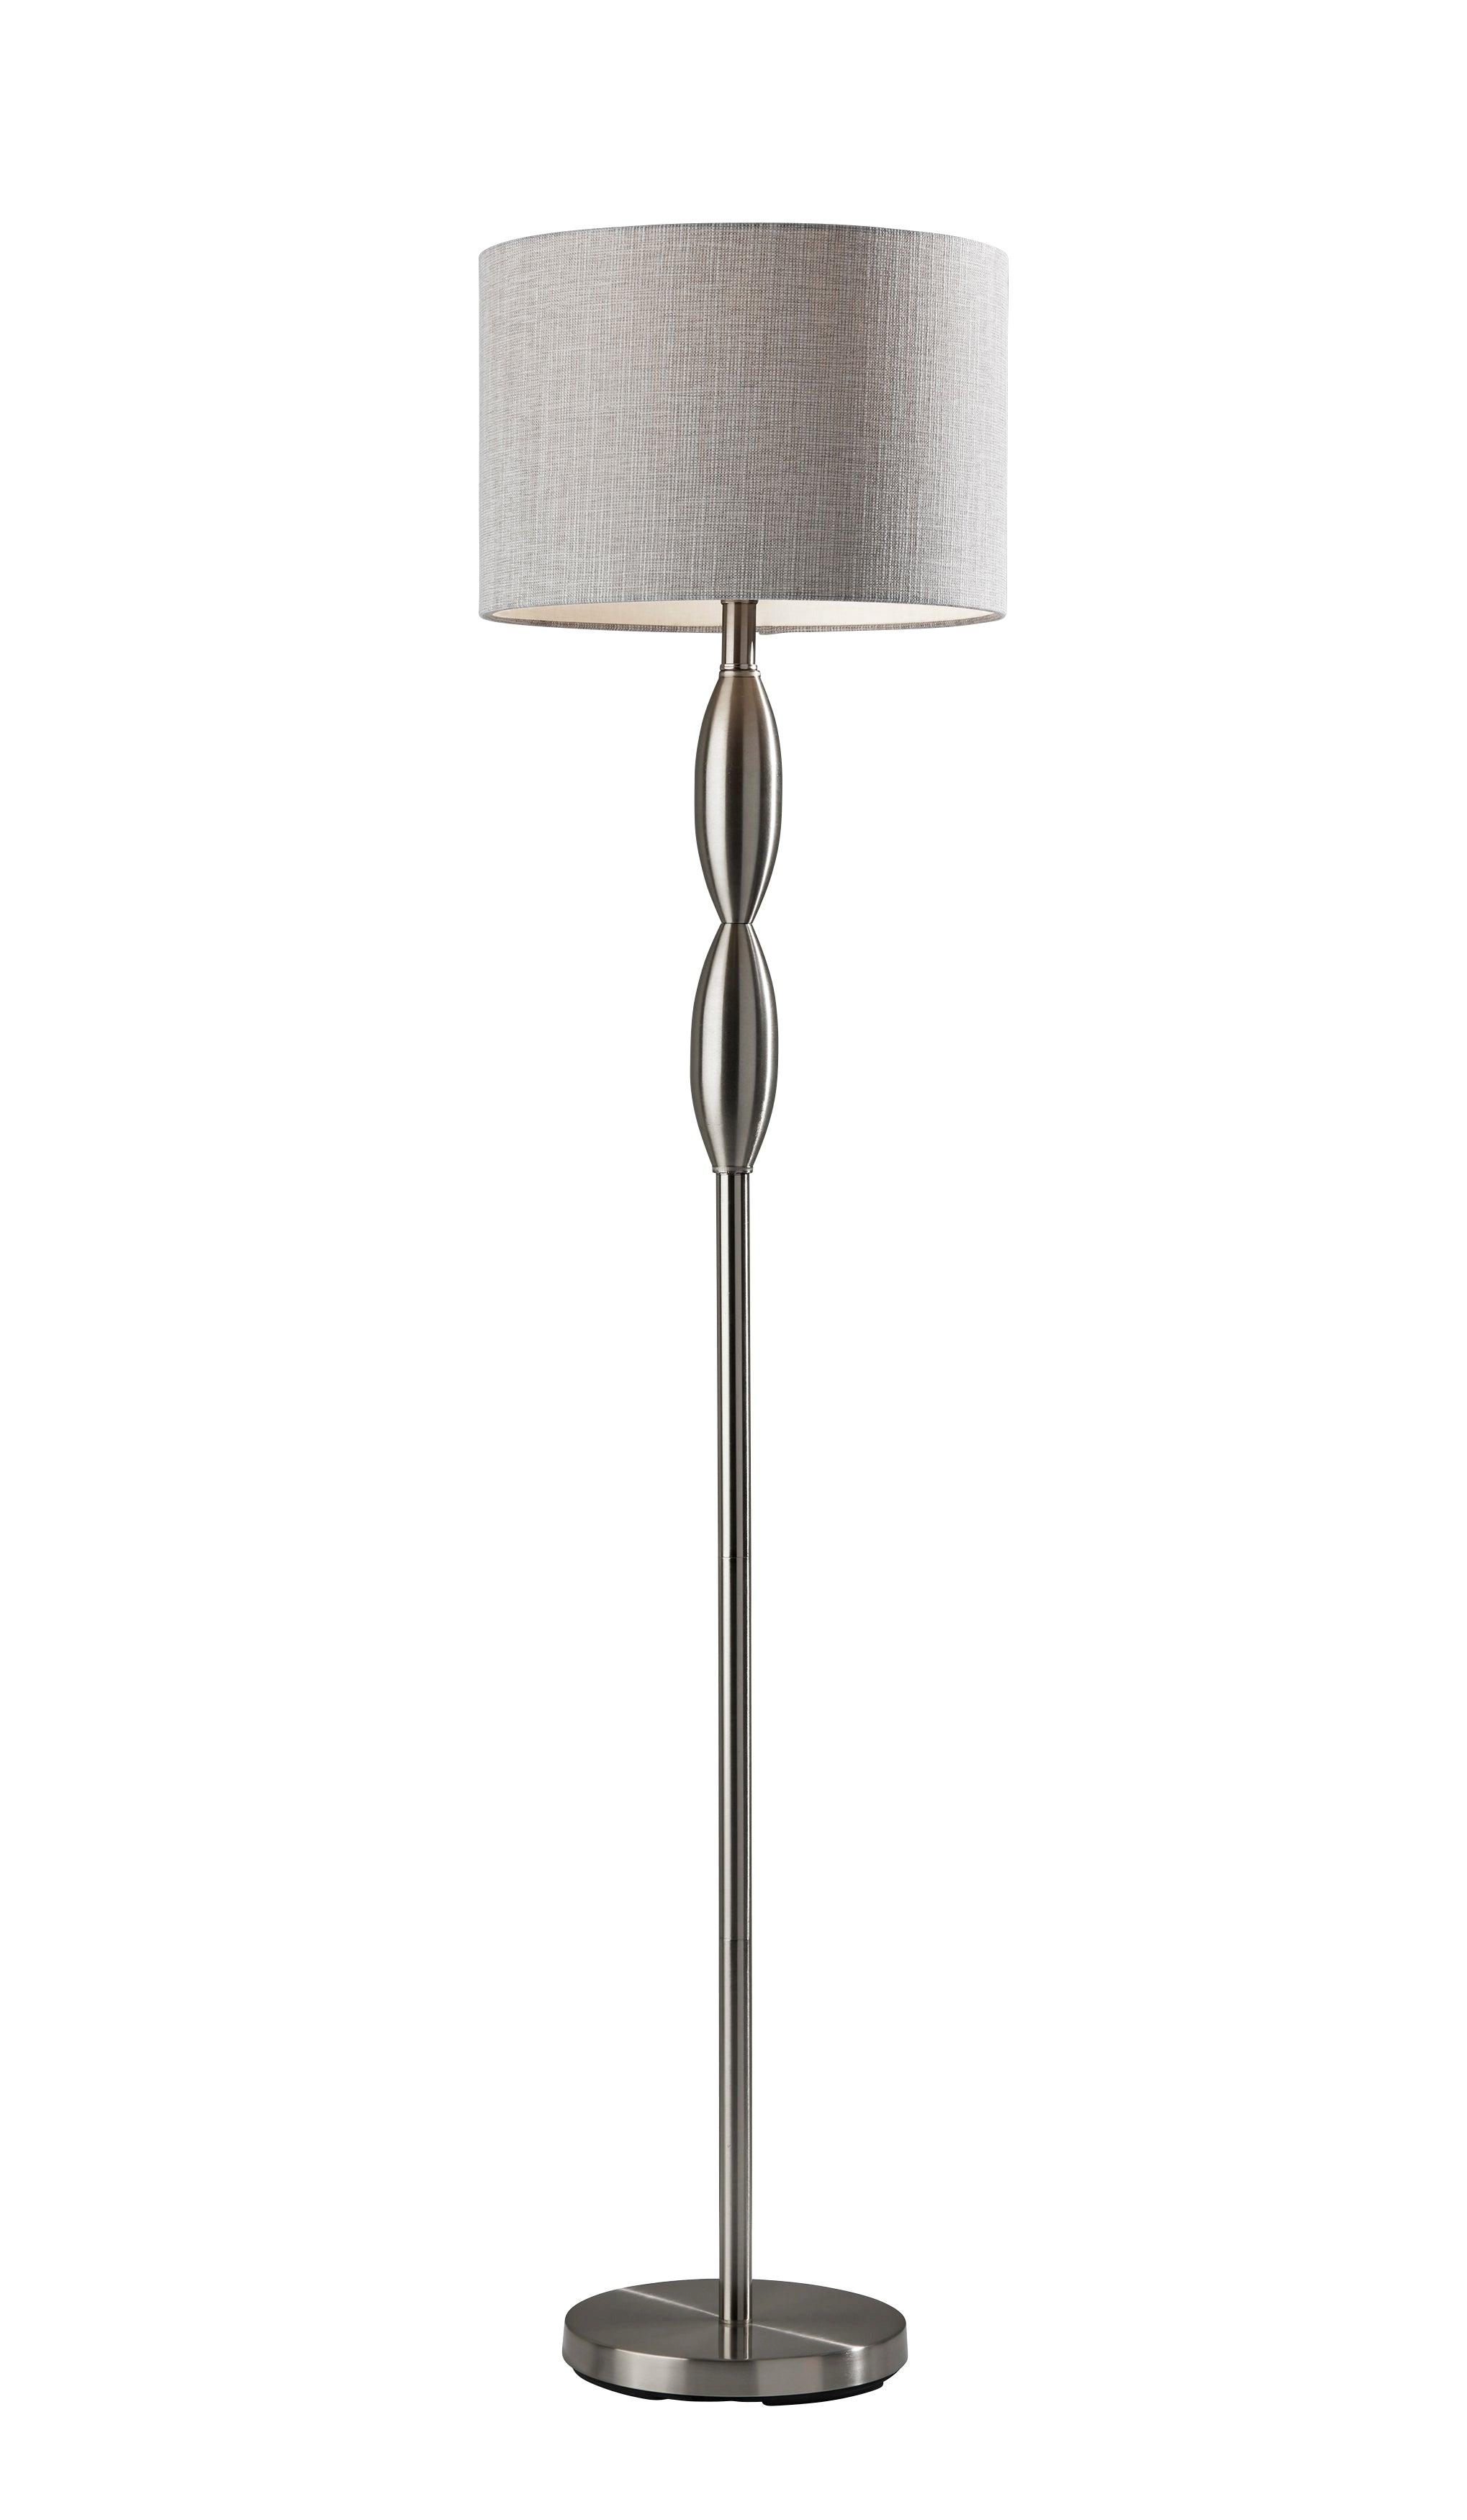 LANCE Floor lamp Stainless steel - 1603-22 | ADESSO